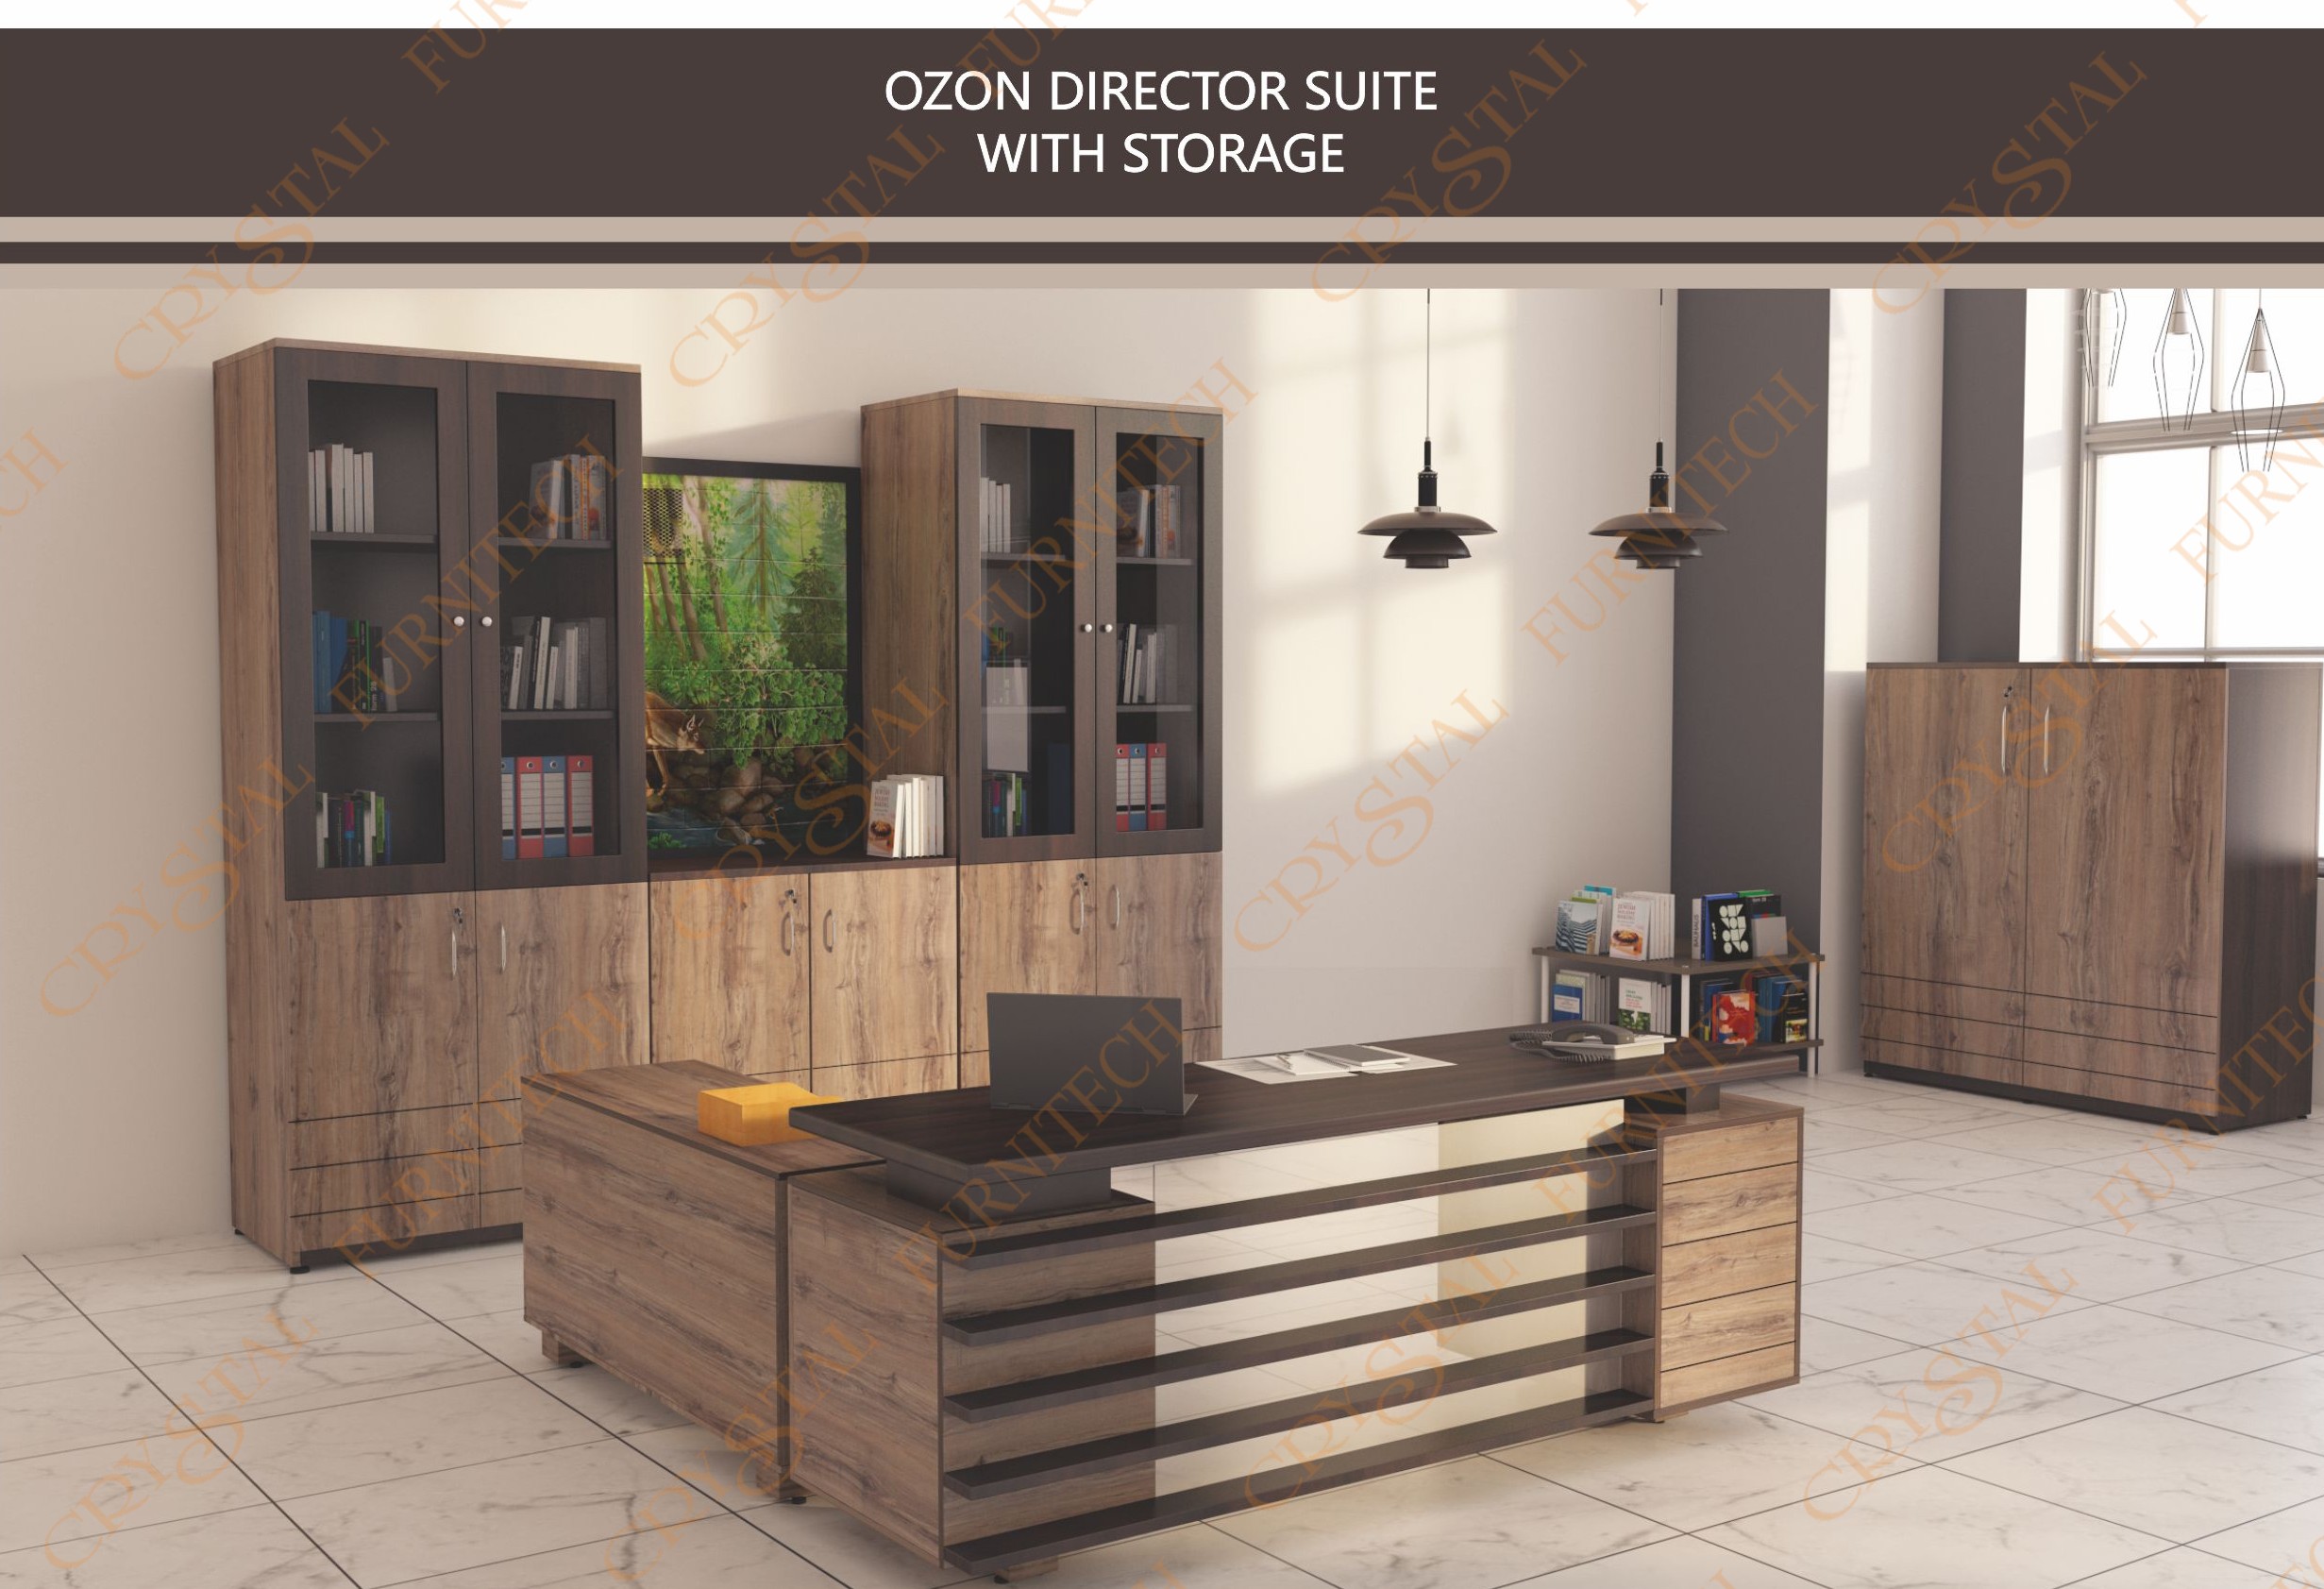 Ozon Director Suite with storage